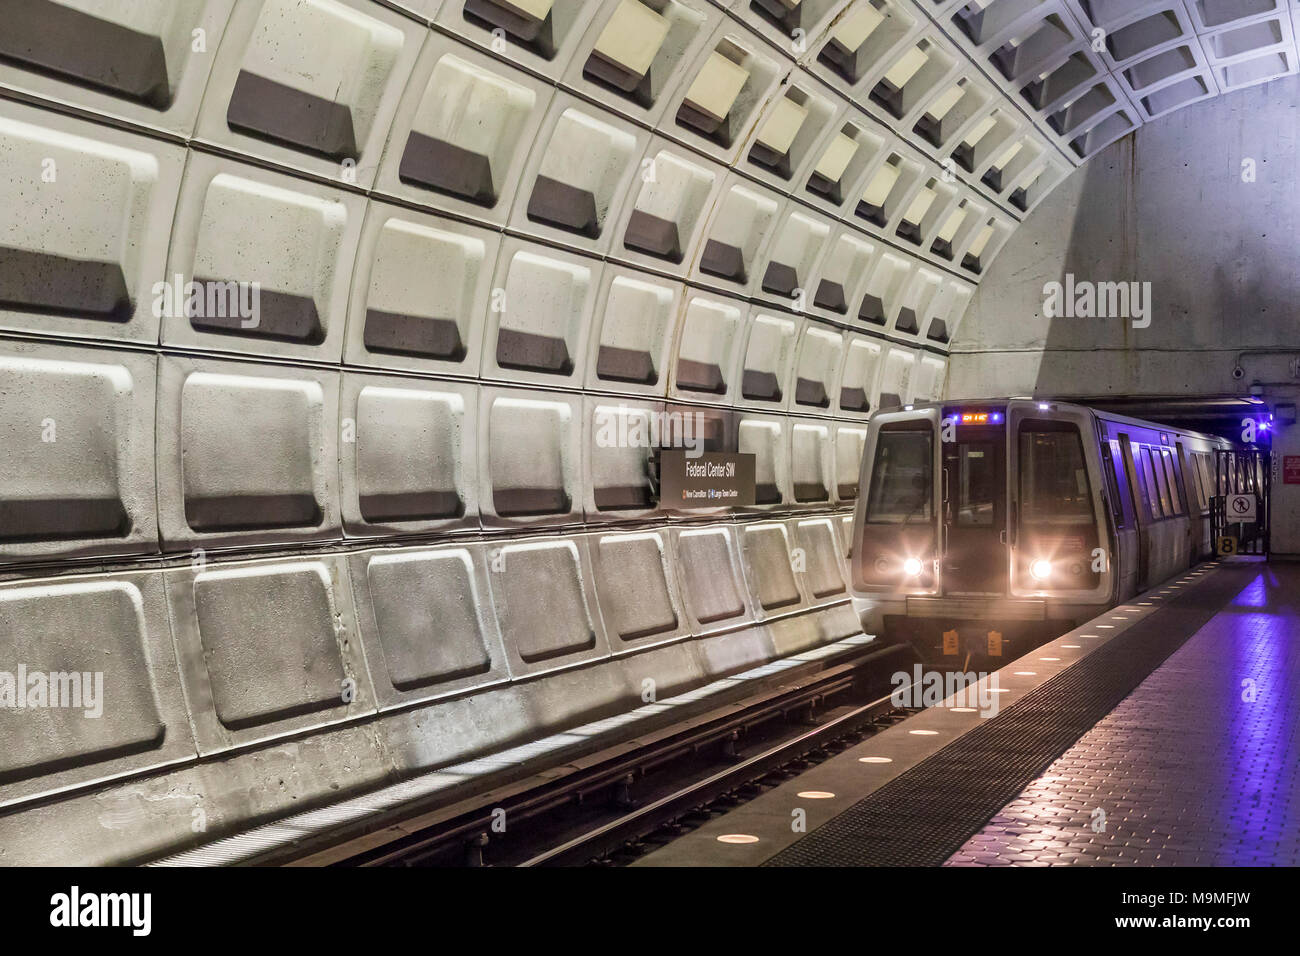 Washington, DC - a Washington la metropolitana treno arriva presso il Centro Federale SW station. Foto Stock